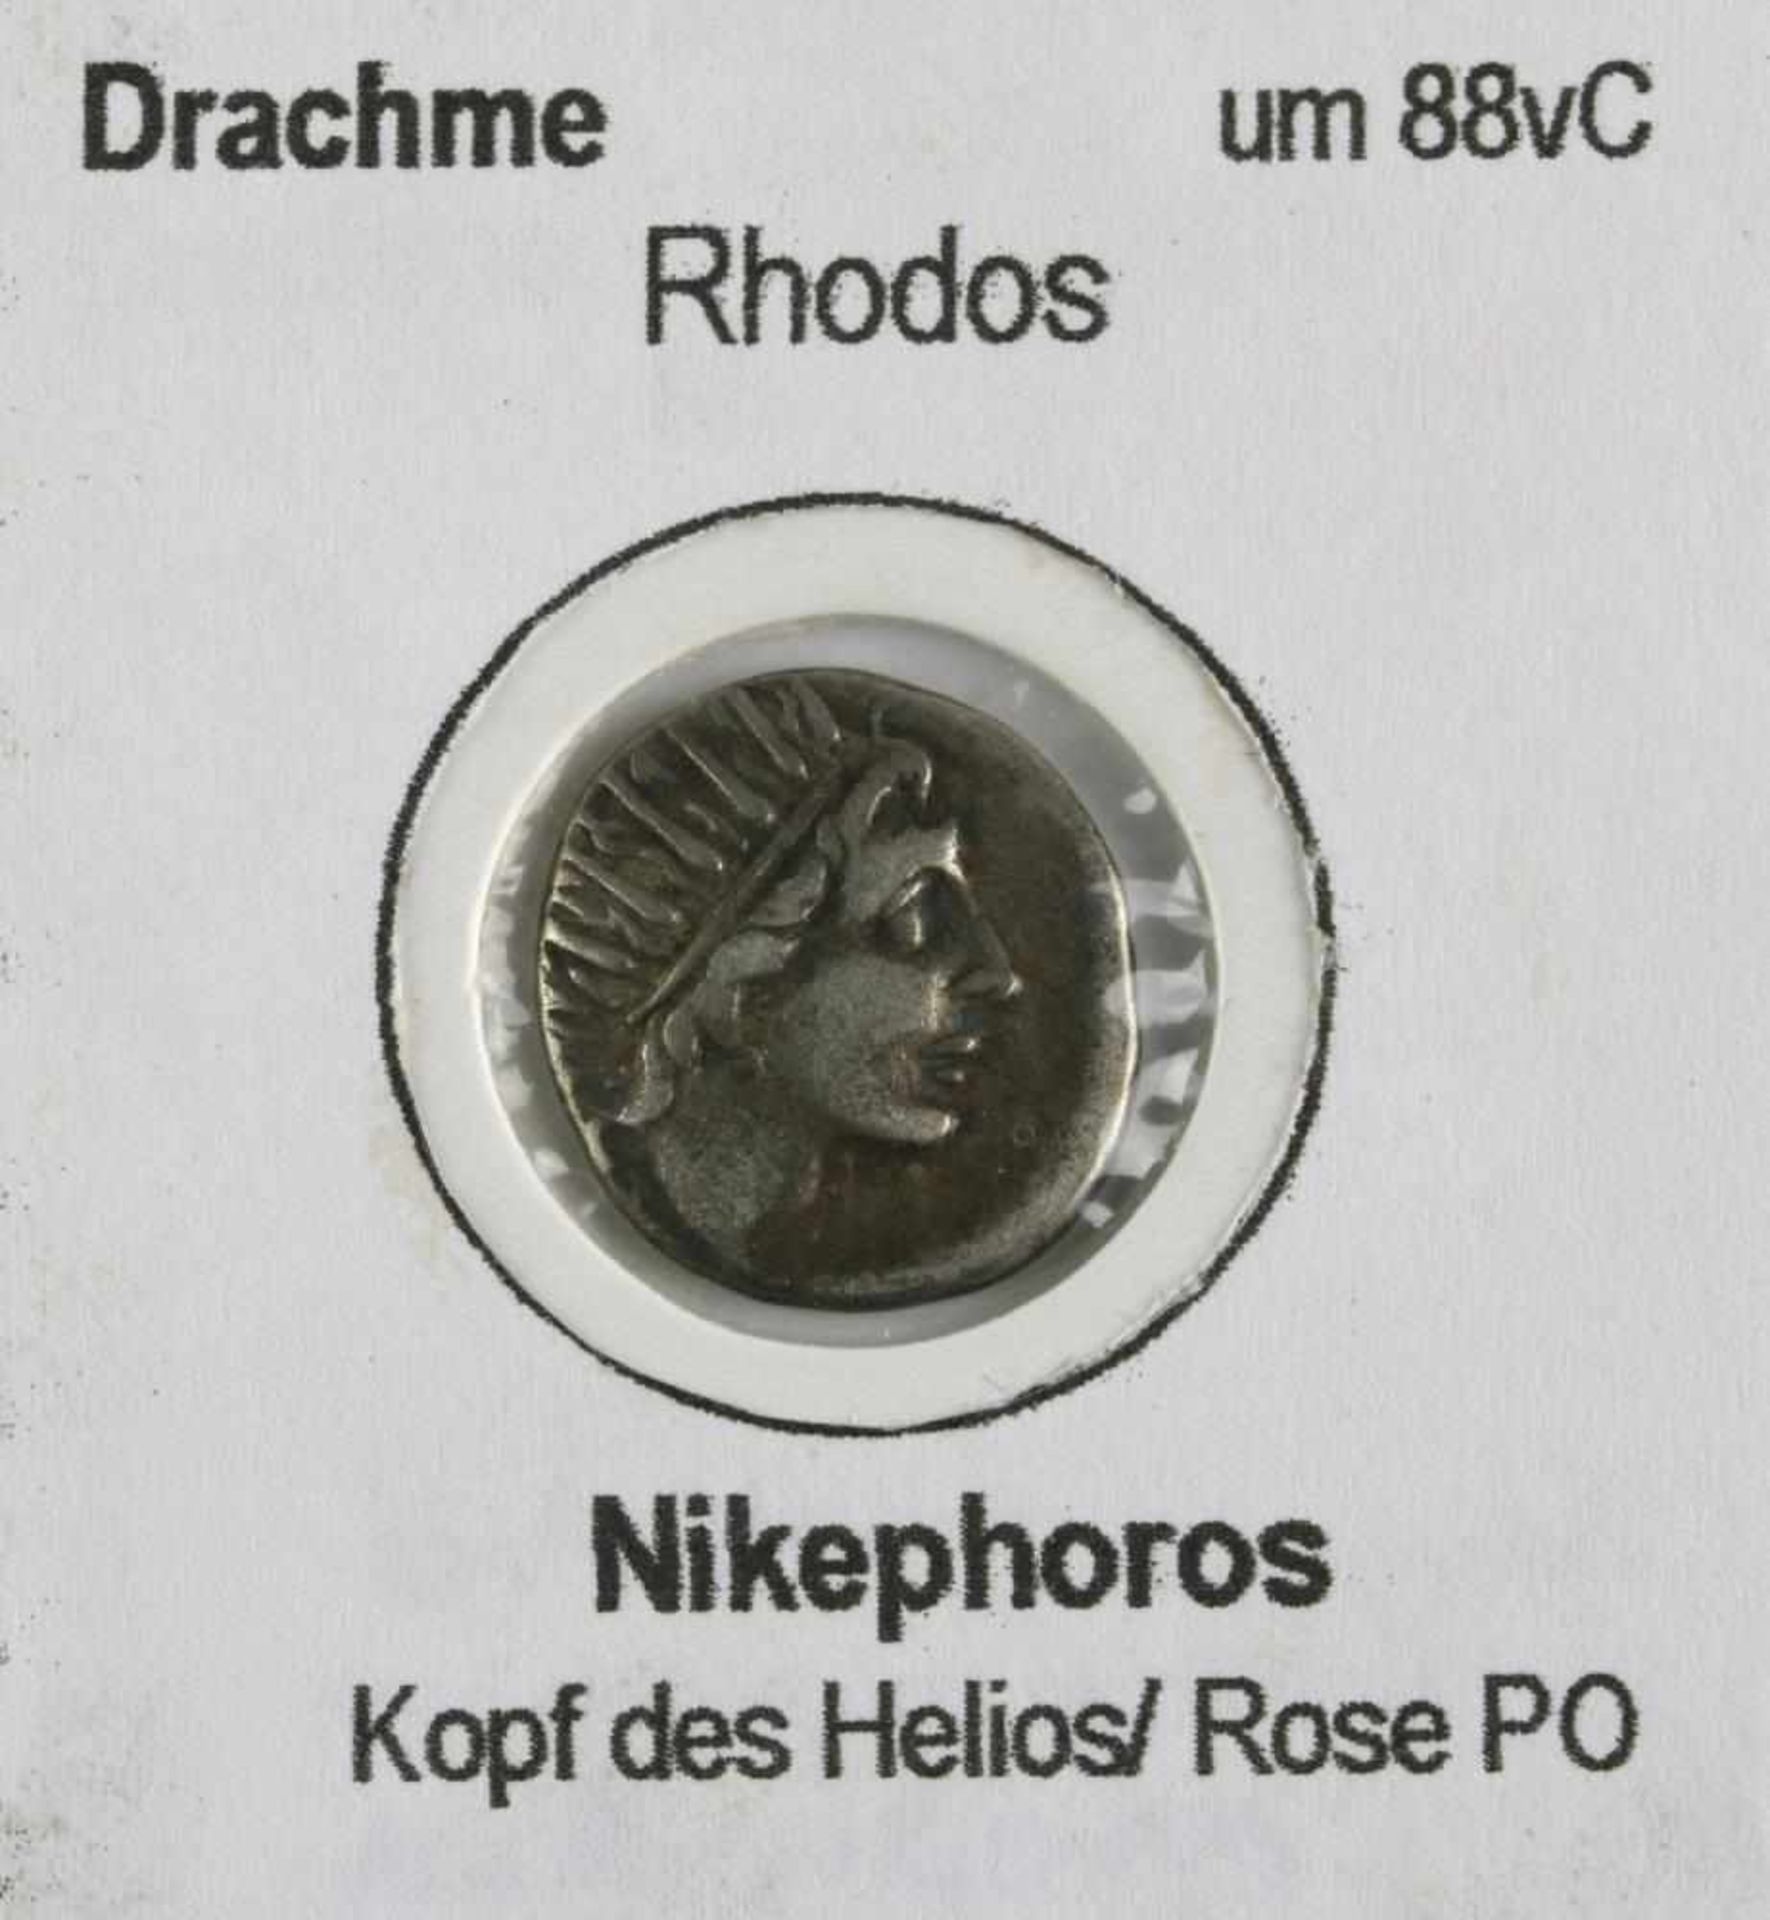 Drachme. Rhodos um 88 v. Chr. Nikephoros. Kopf des Helios / Rose PO. Durchmesser ca. 15 mm,